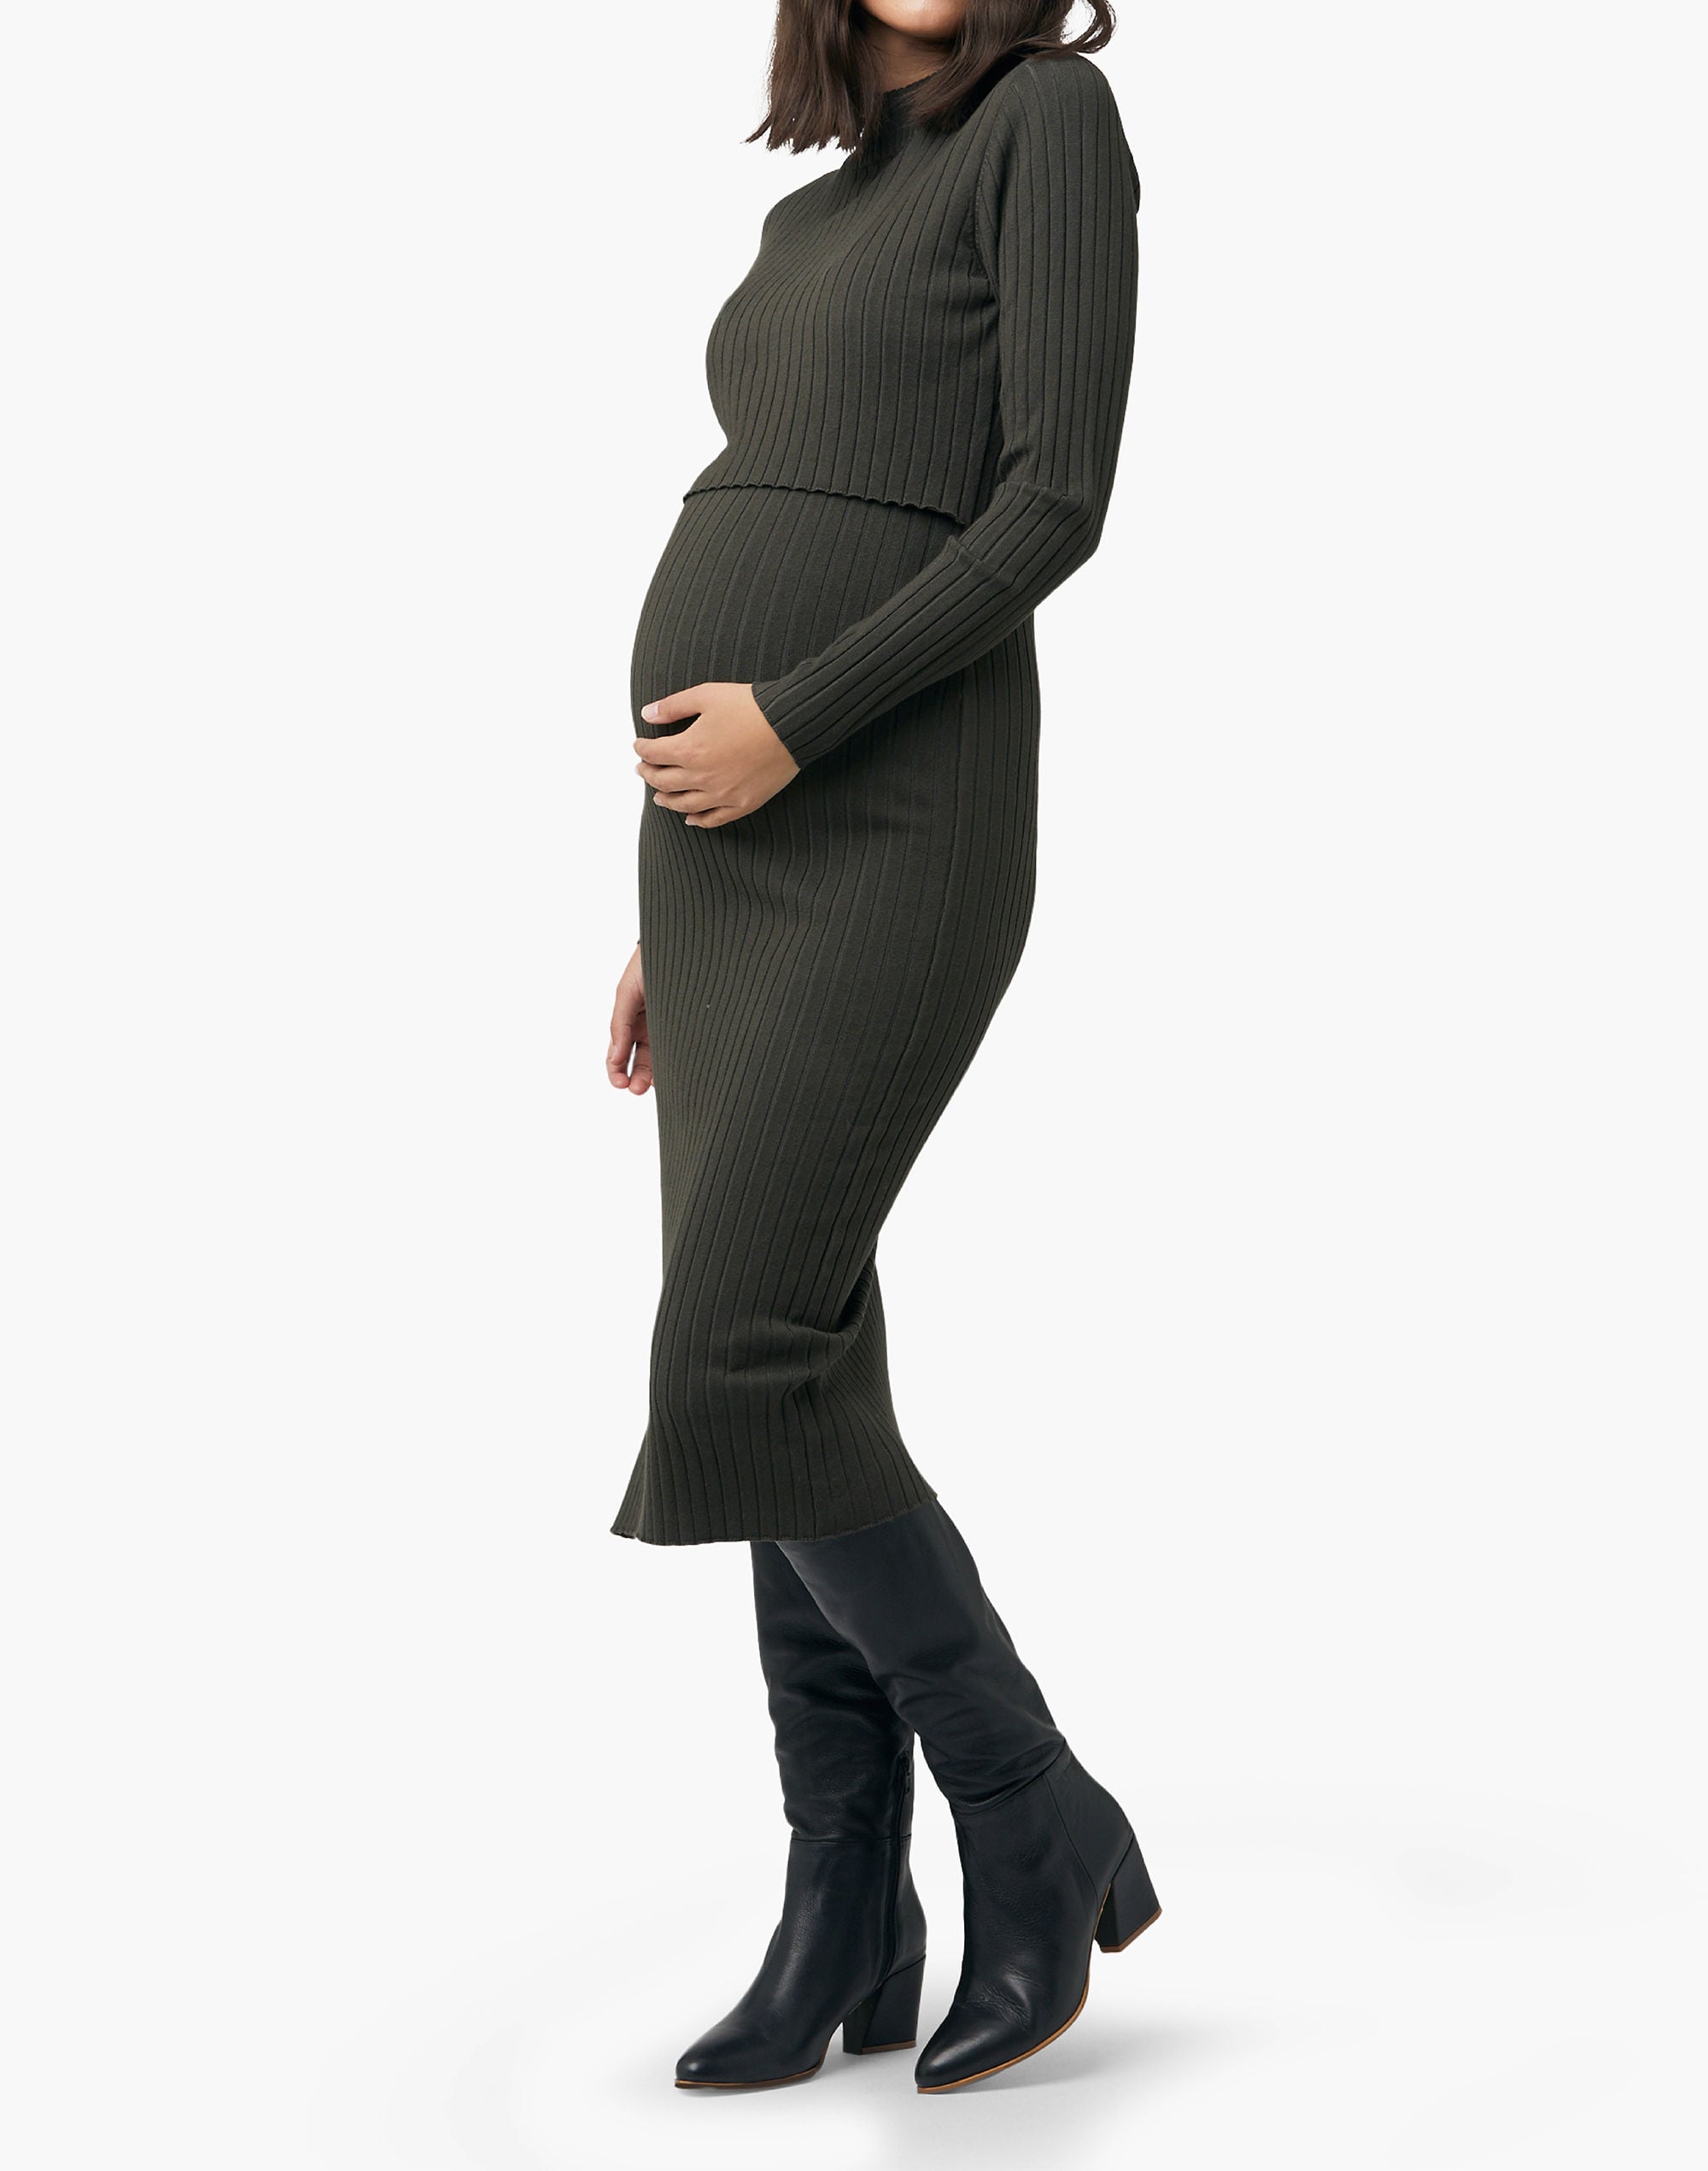 Ripe Maternity Nella Rib Nursing Knit Dress